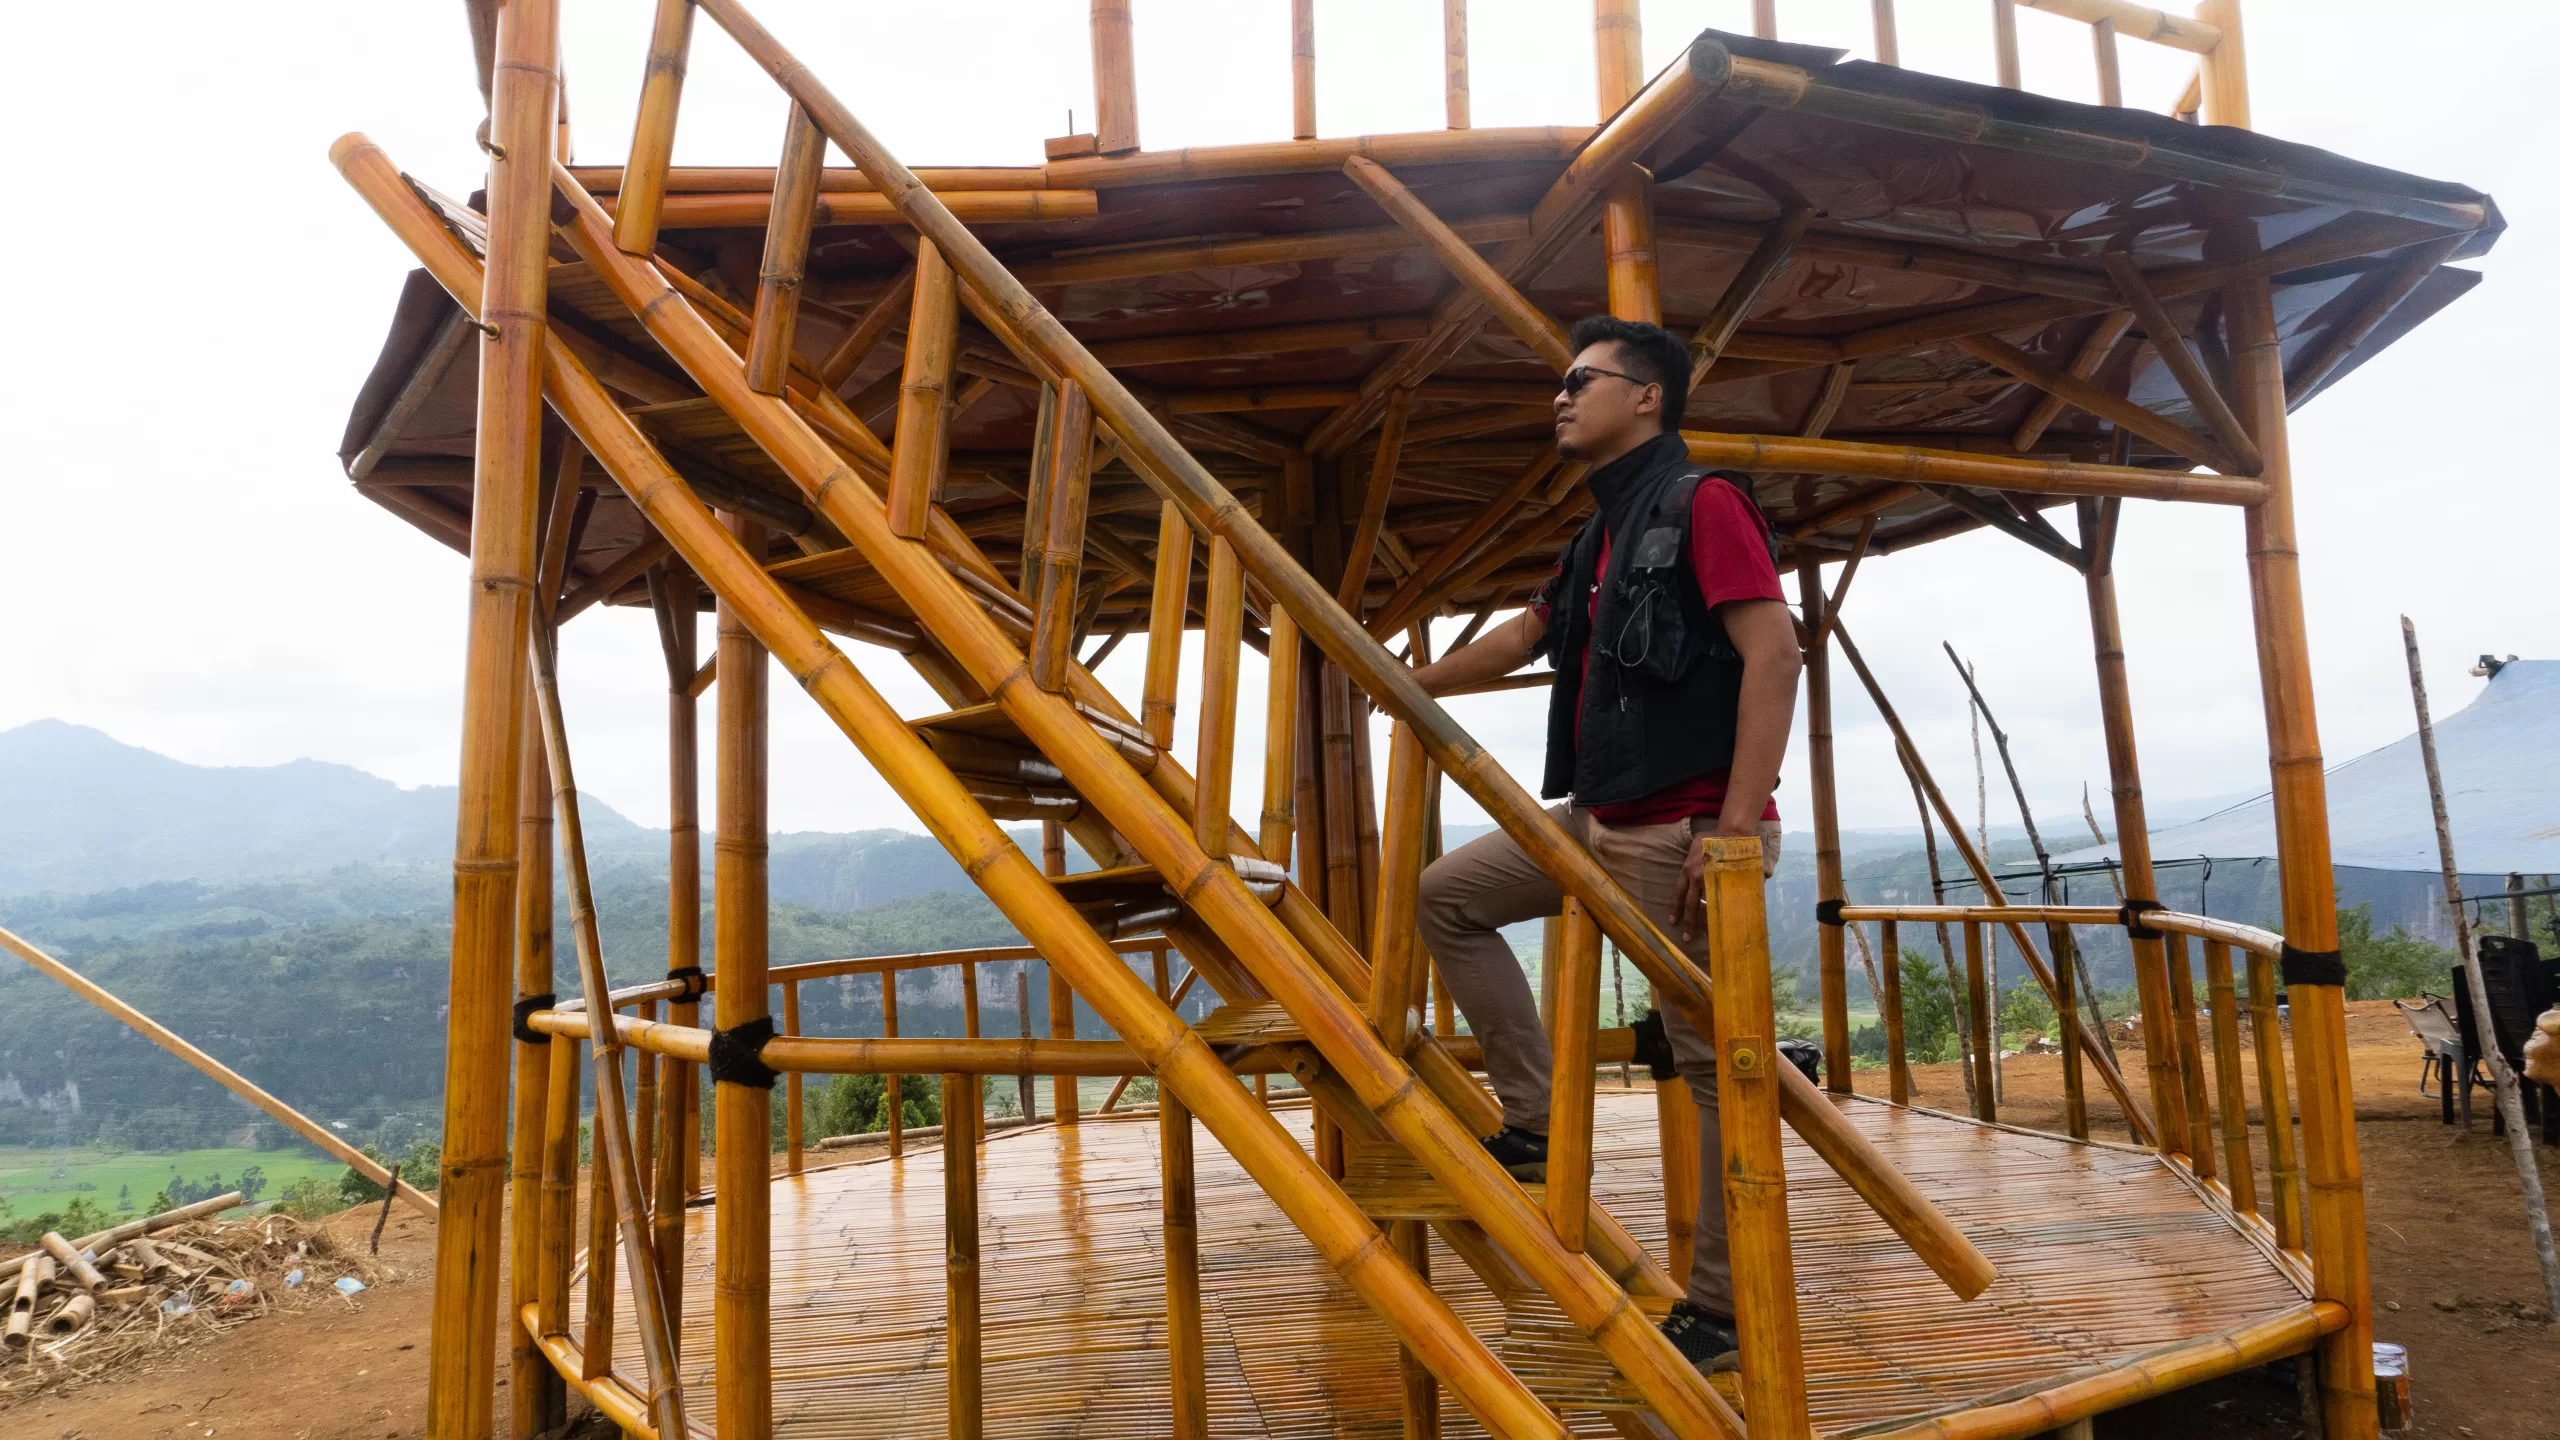 Desain posko bambu Bukik Soriak Land yang unik